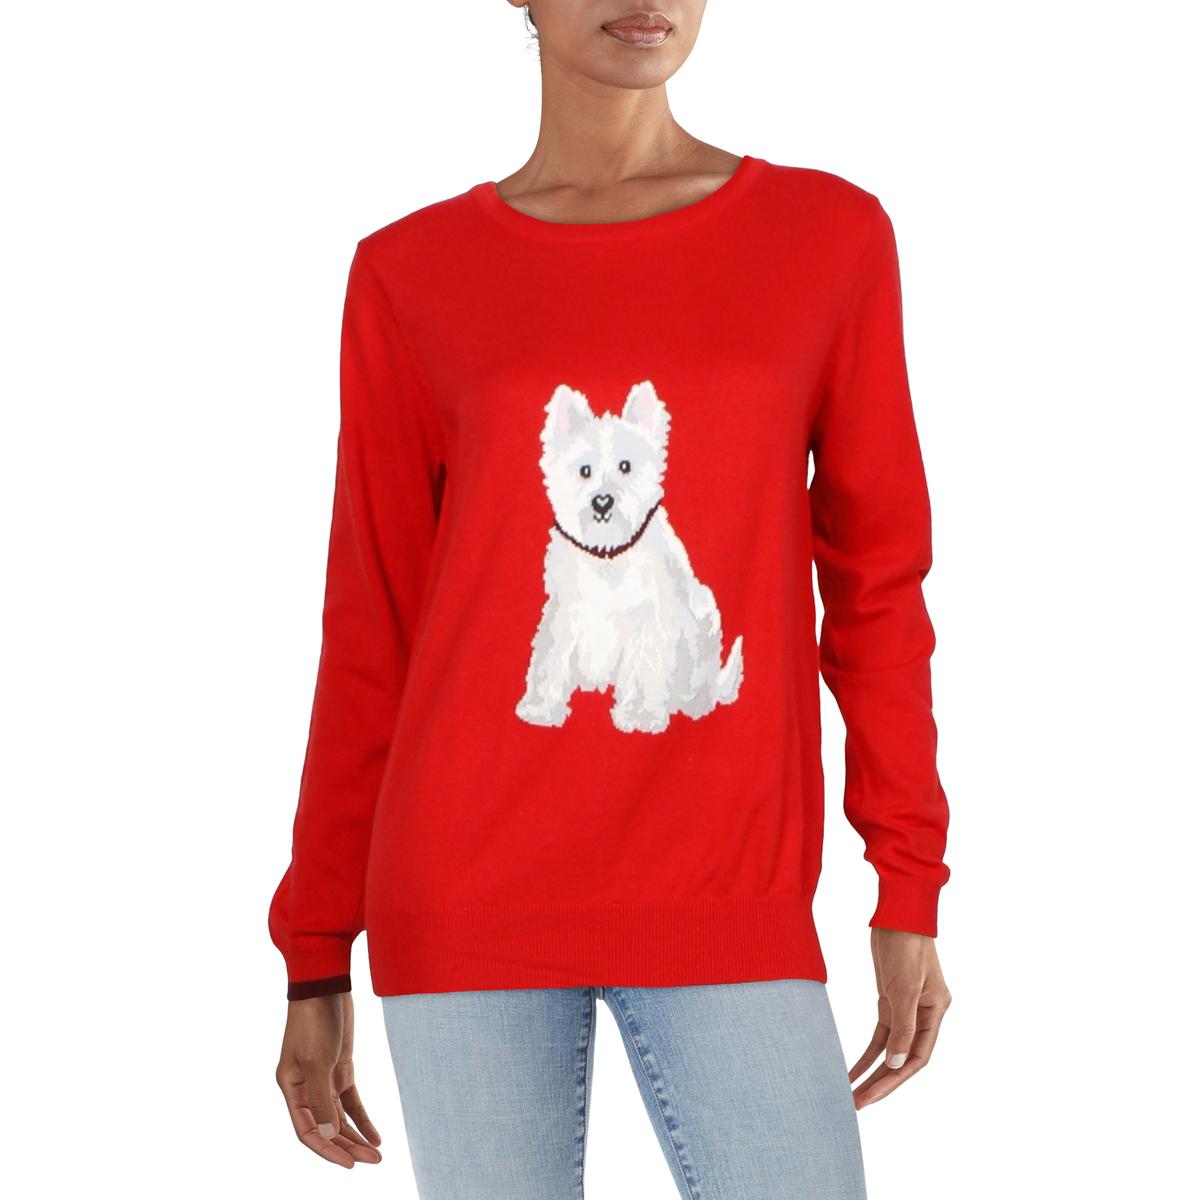 Ladies Blouse Bang Print Jumper Tracksuit Top Sweatshirt Pullover Size 8-14 FW99